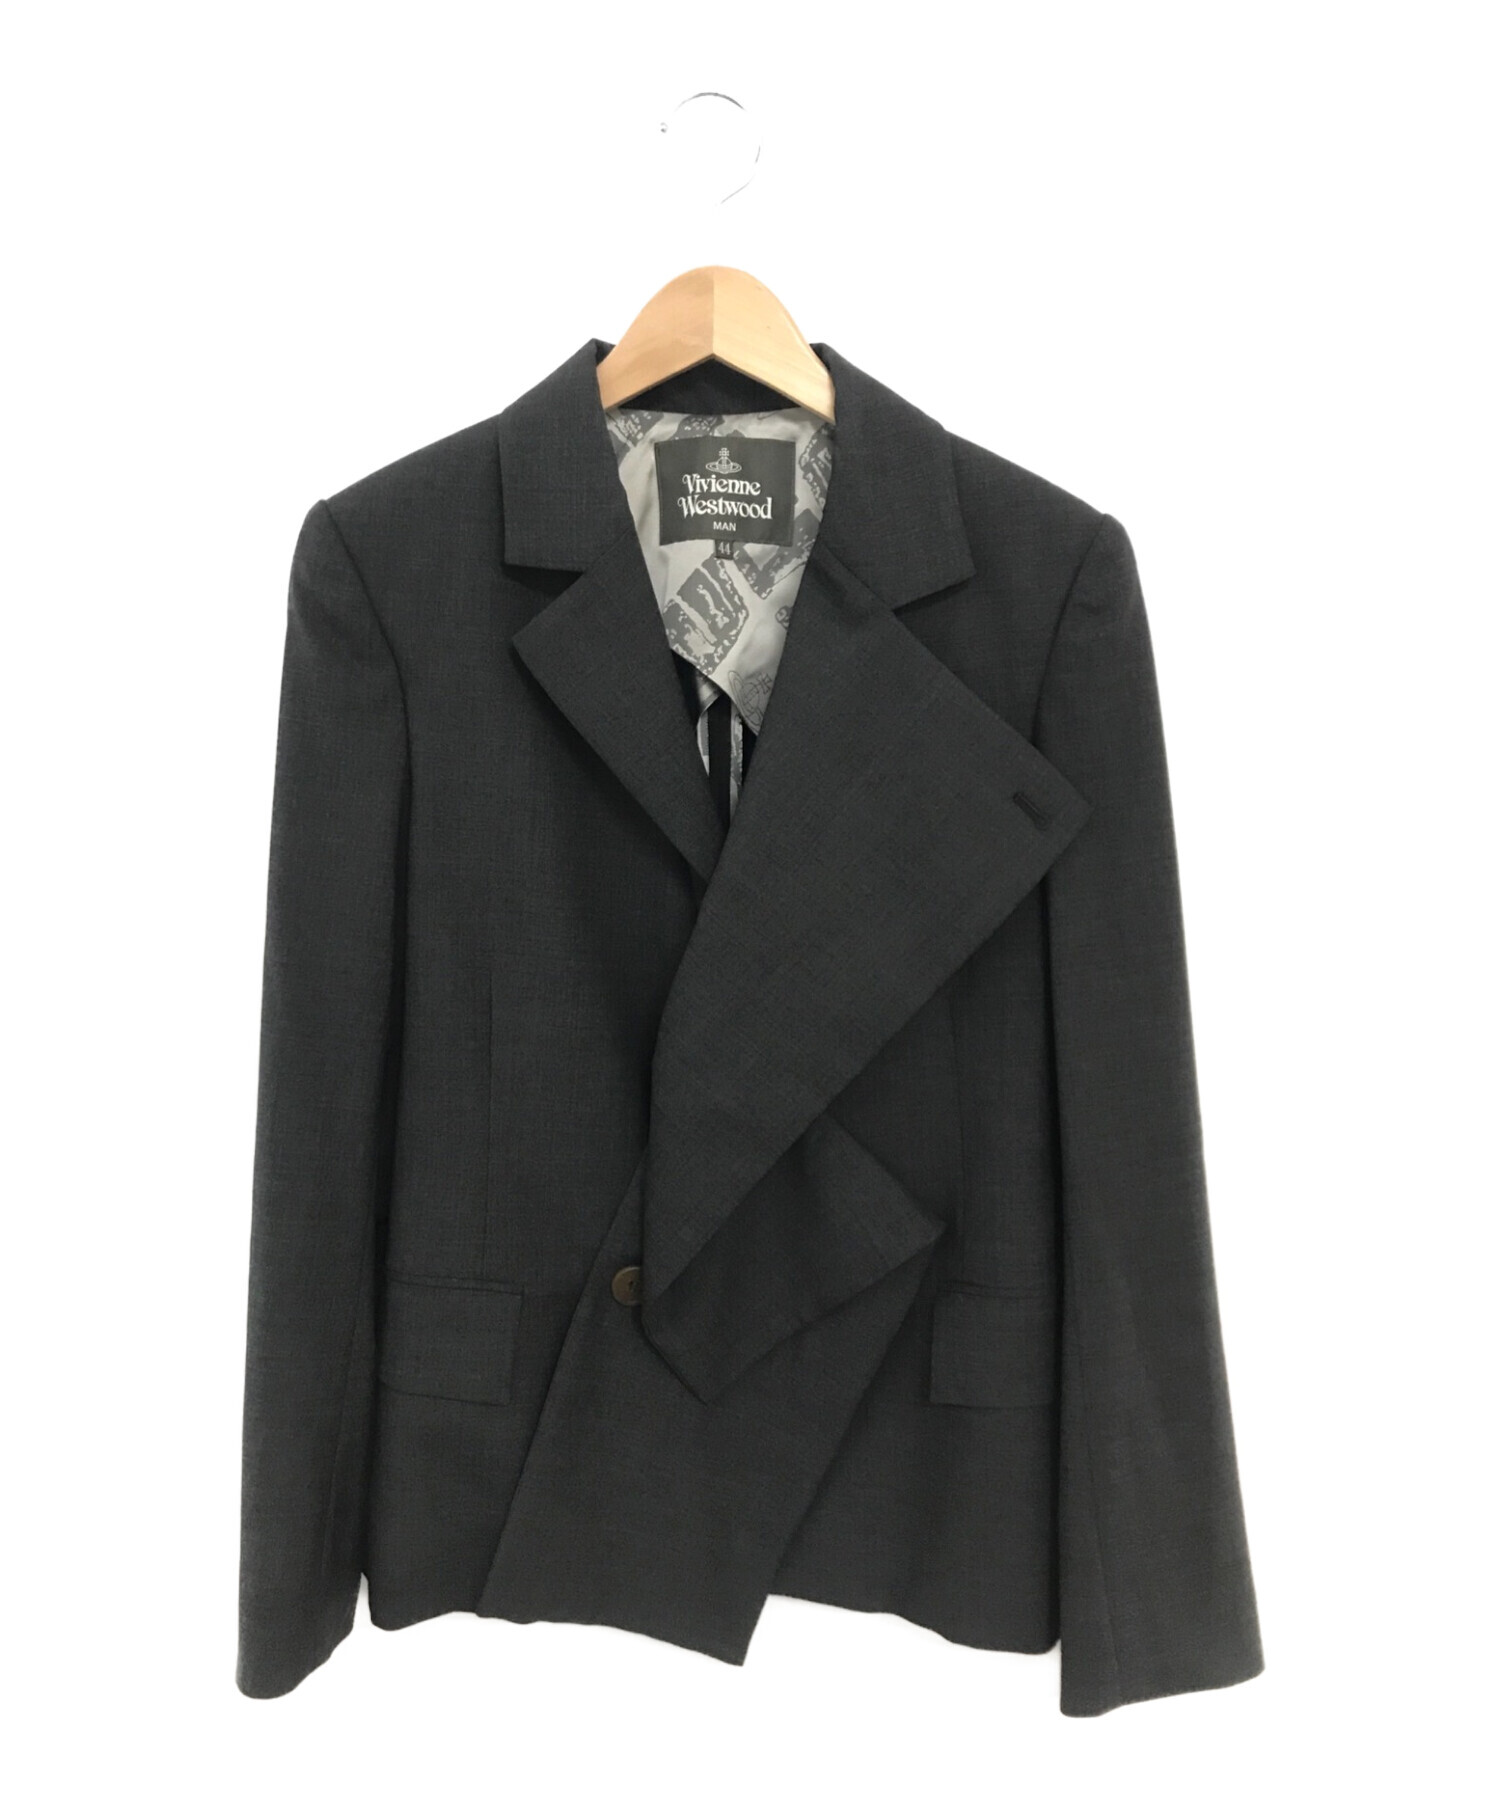 Vivienne Westwood man (ヴィヴィアン ウェストウッド マン) デザインジャケット グレー サイズ:44